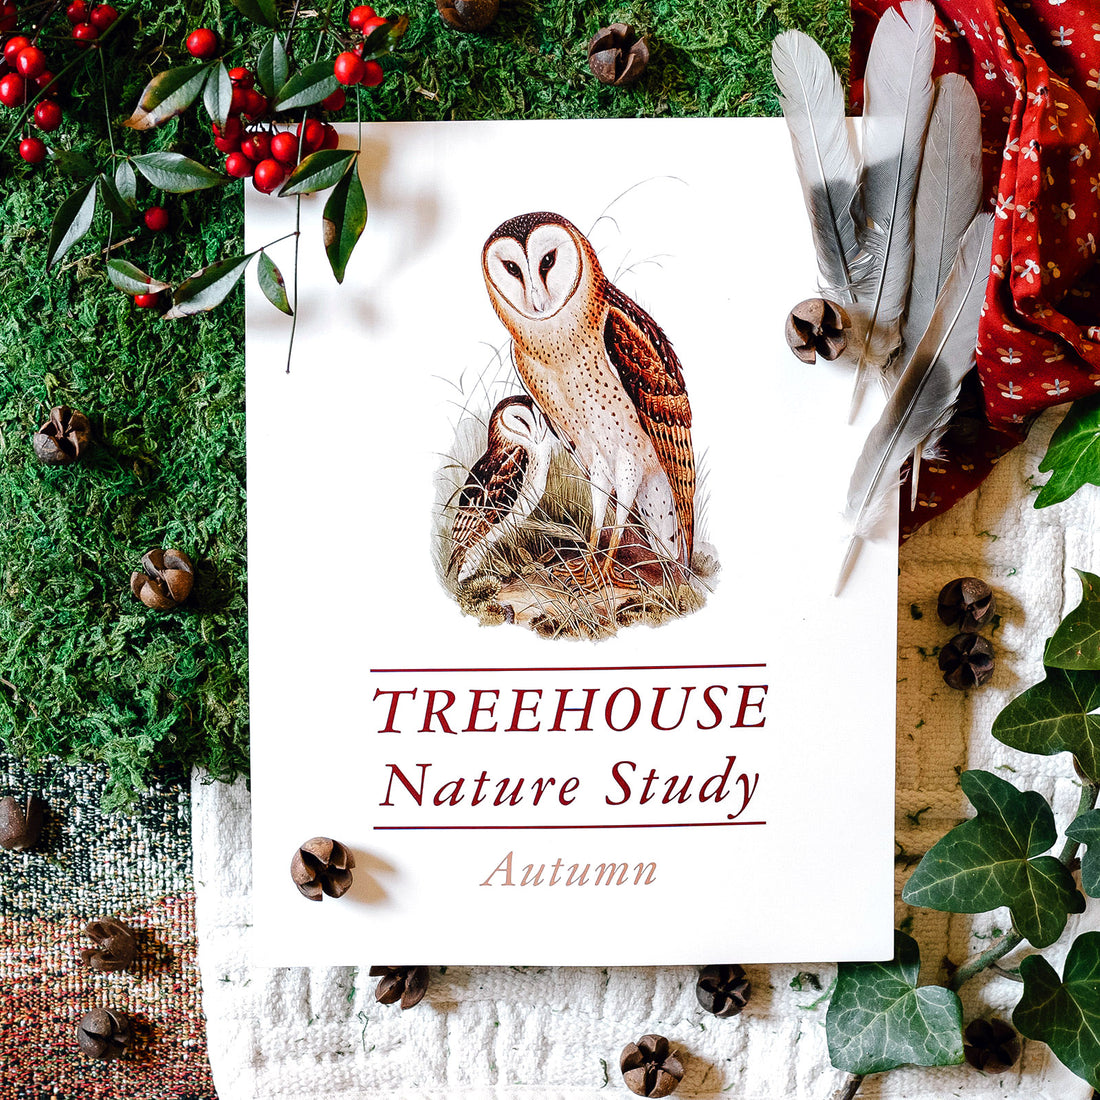 A new kind of Nature Study has begun! 🦋🌿 - Vera Bradley